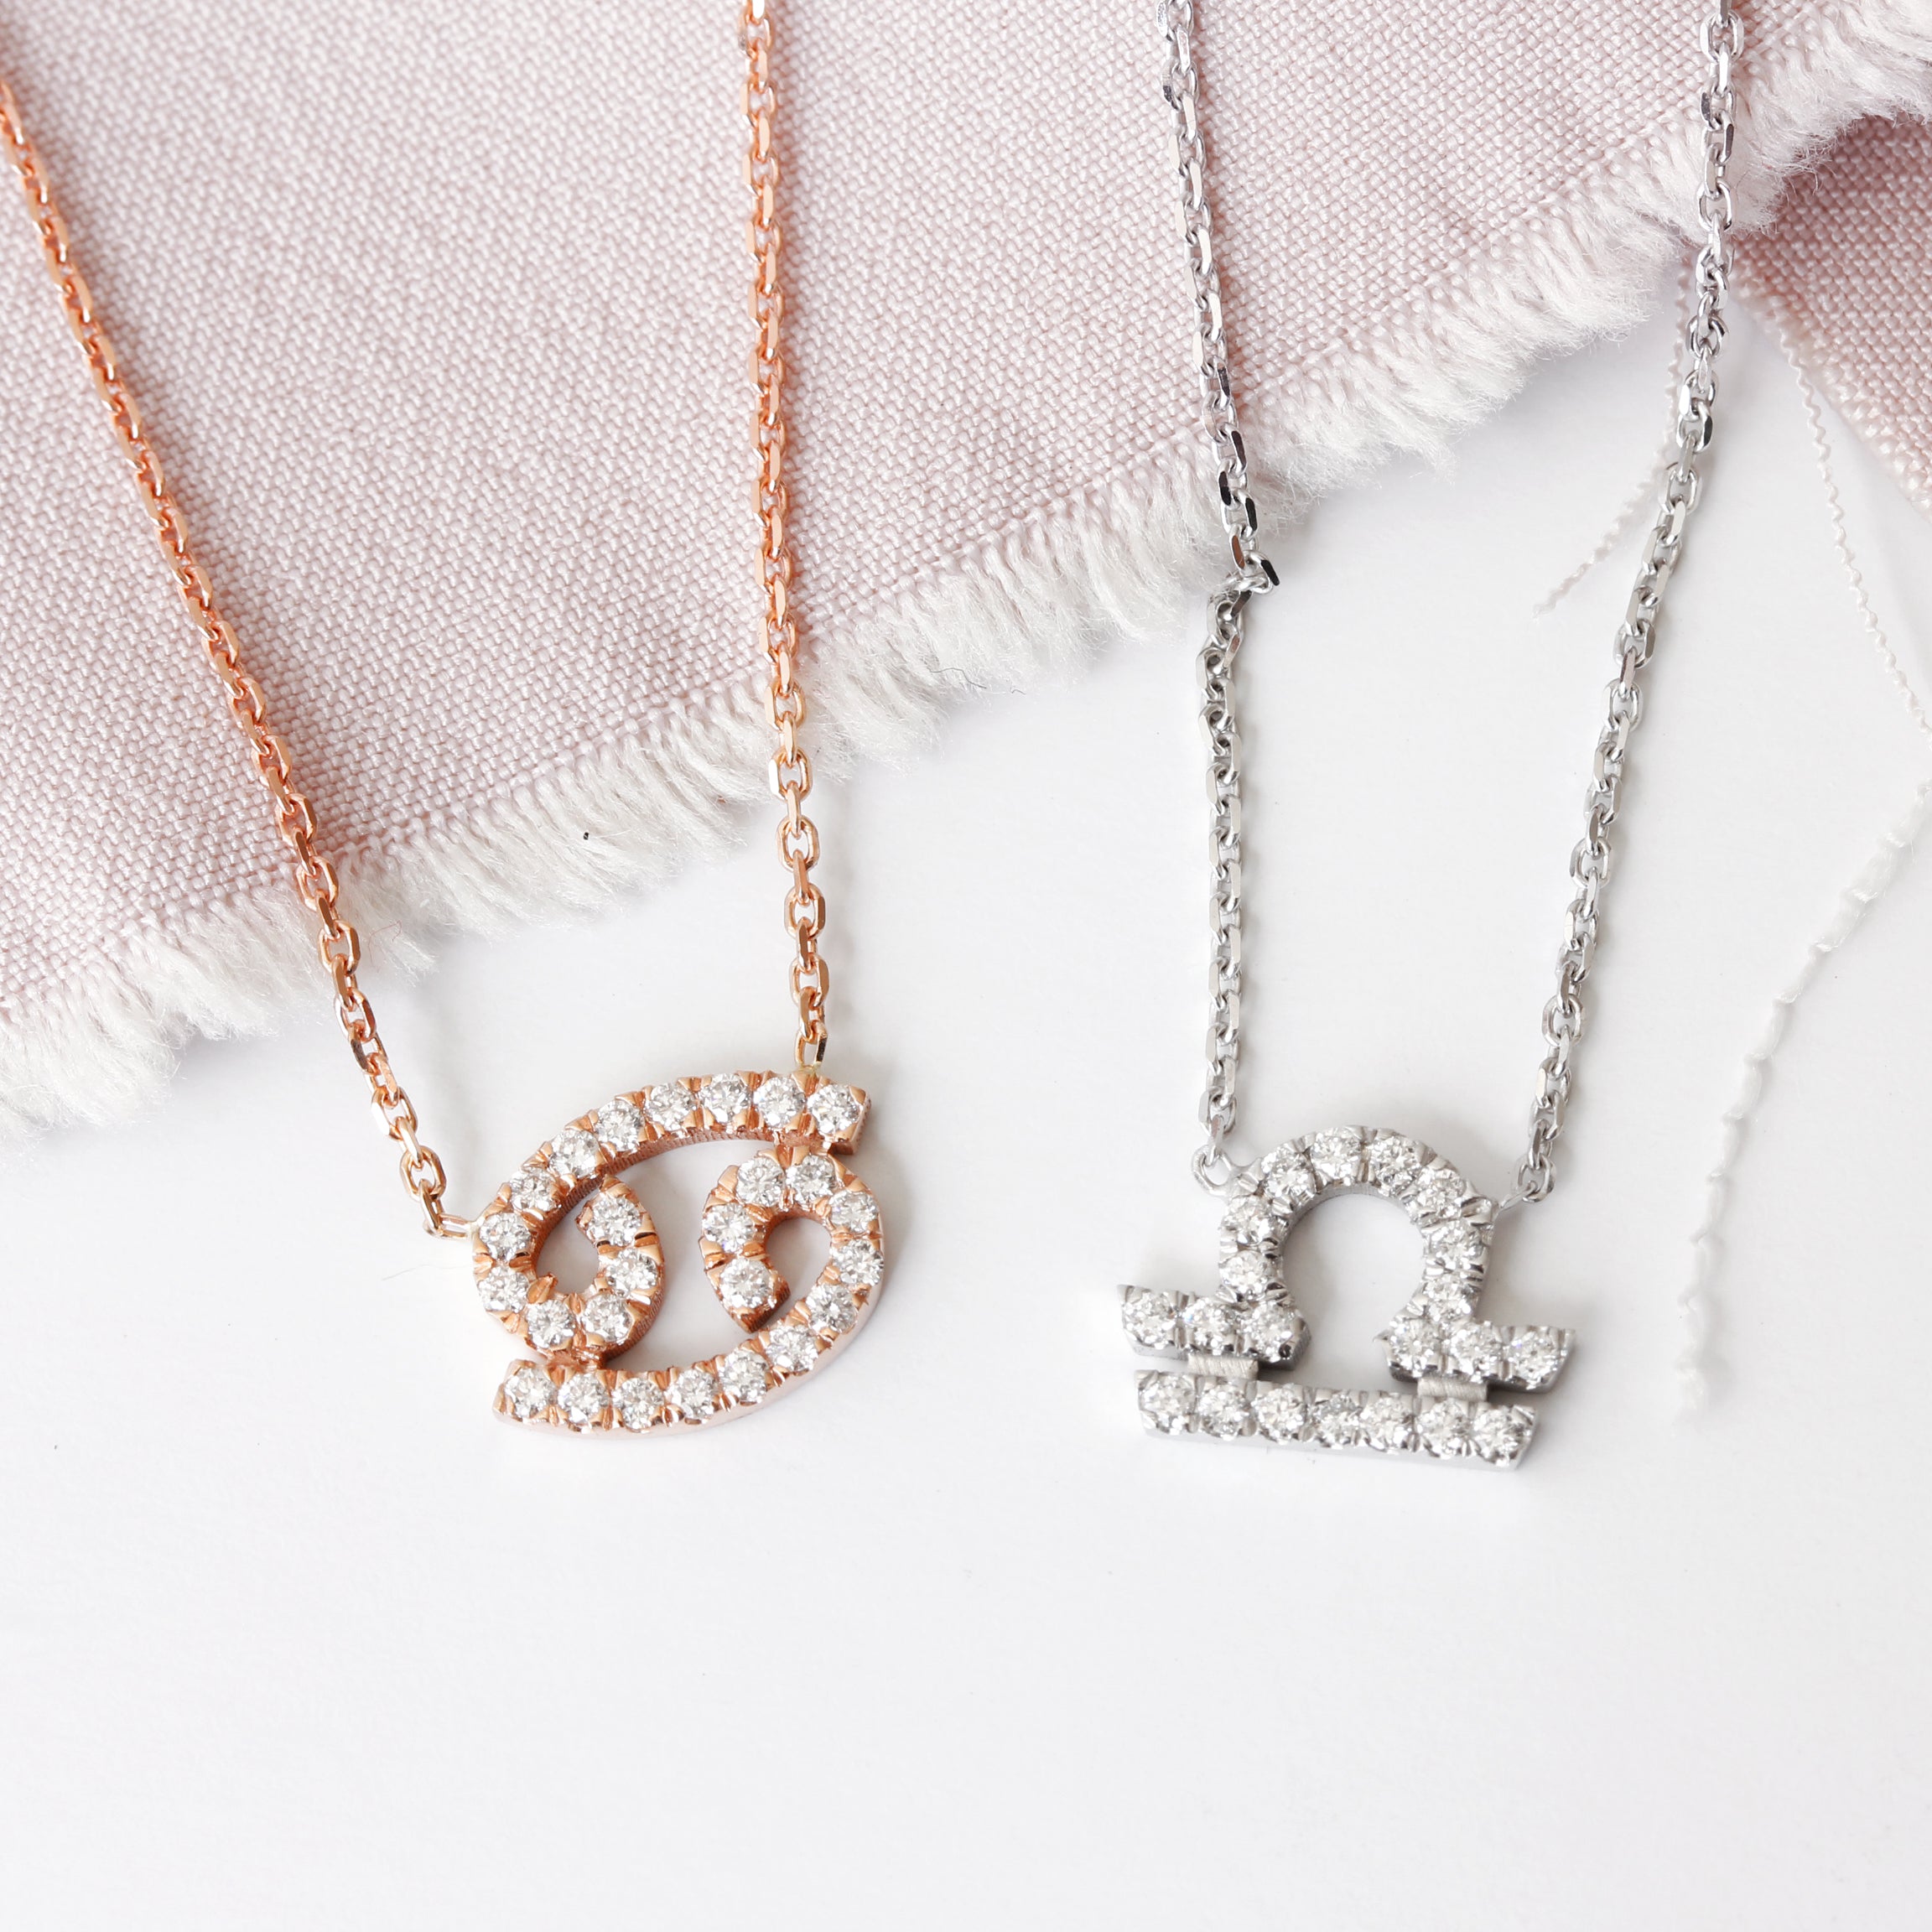 Small Zodiac Astrology Symbol Diamond Pendant Necklace